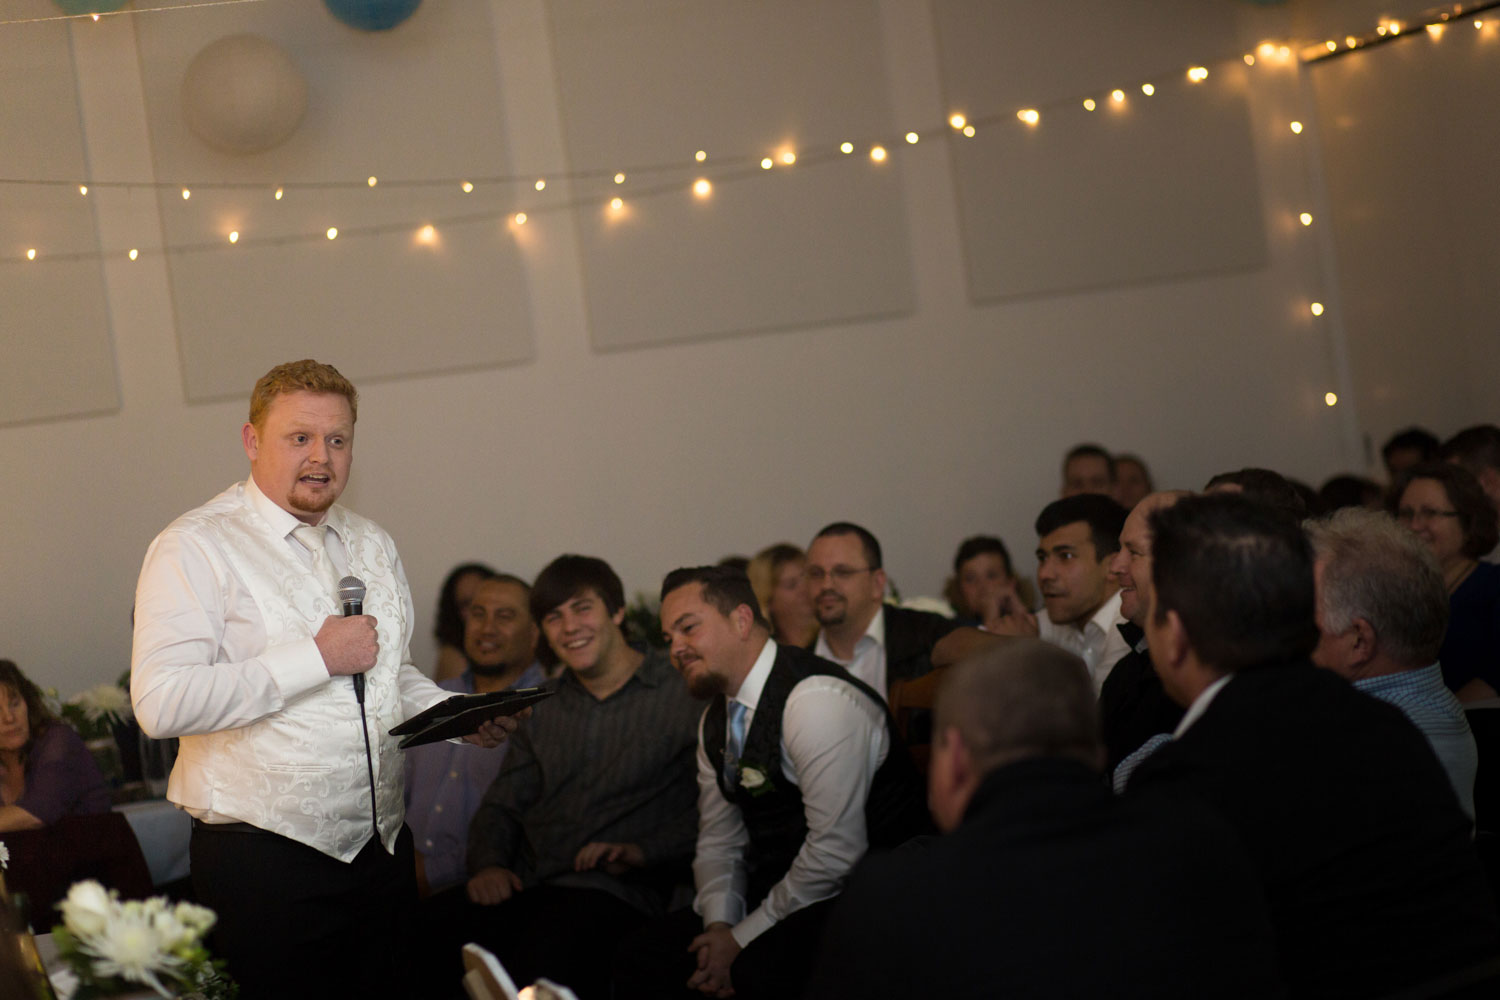 auckland wedding groom speech